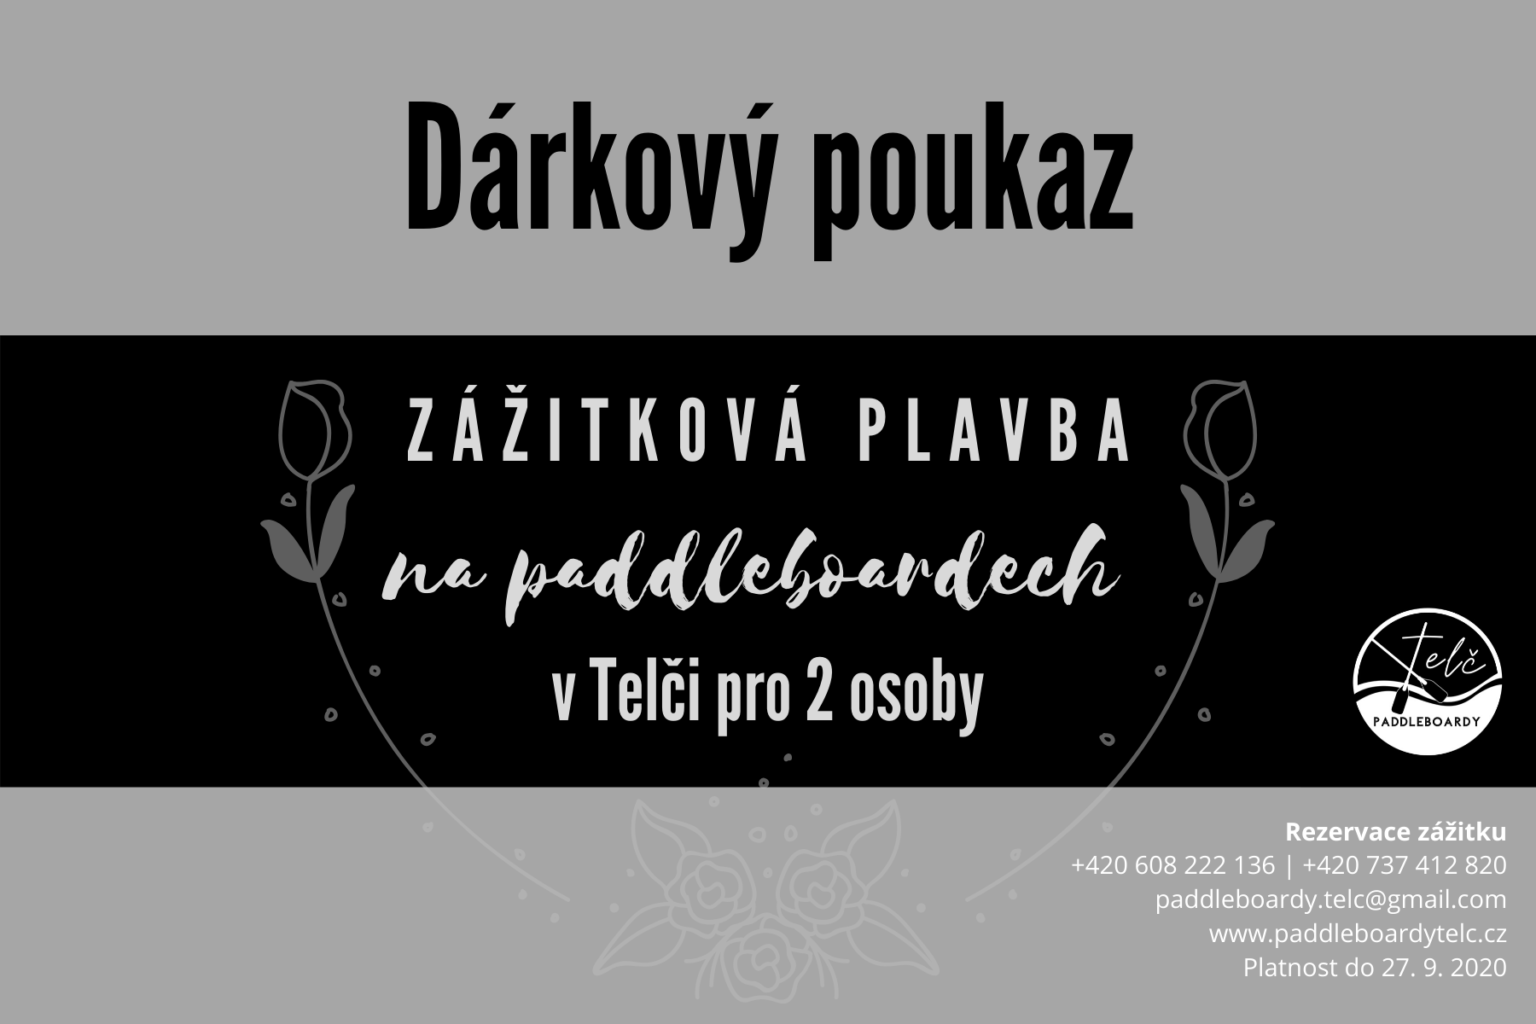 Dárkový_poukaz_PT_202001